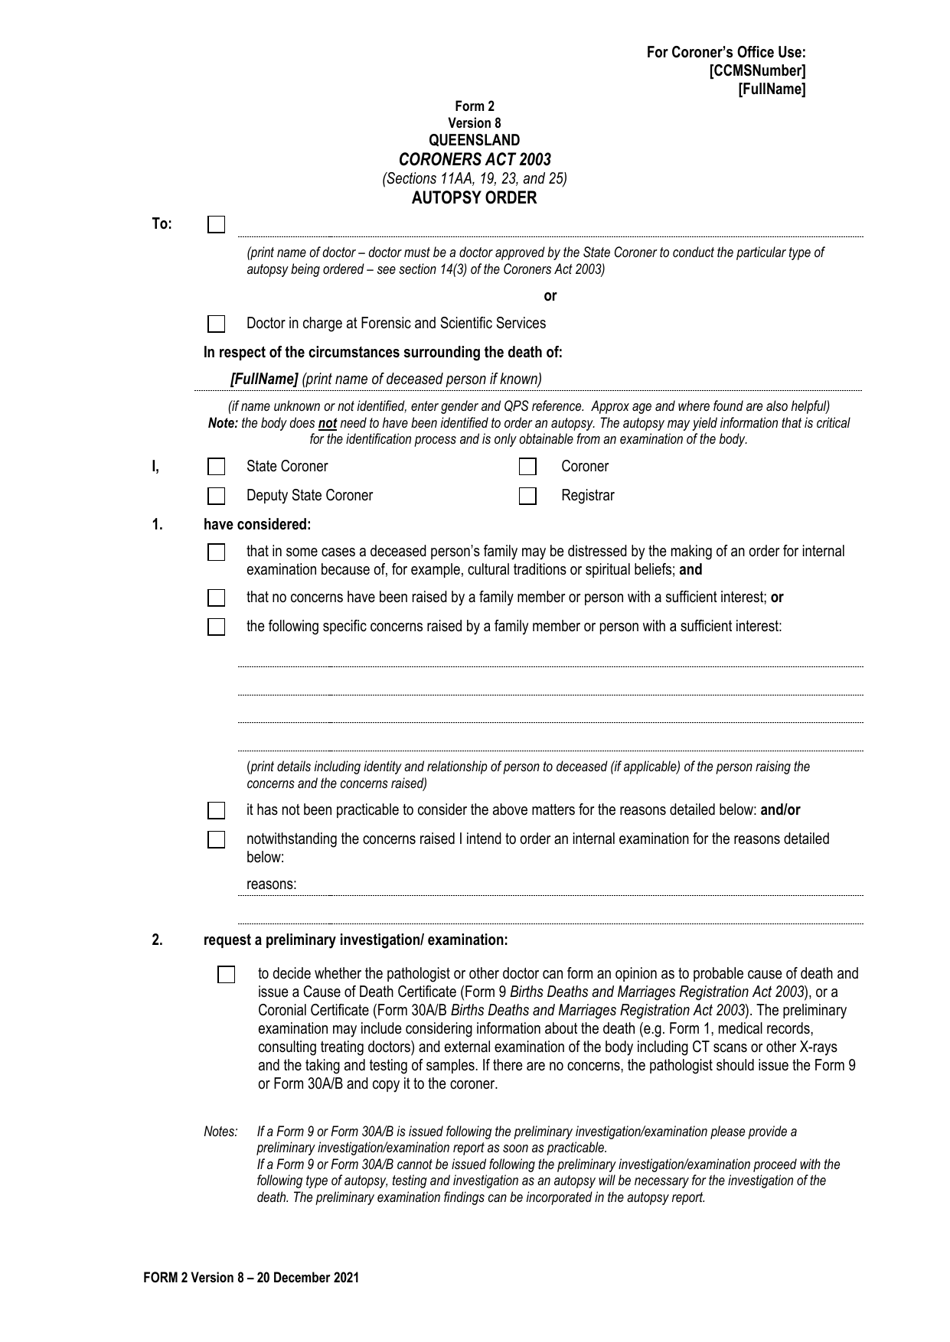 Form 2 Autopsy Order - Queensland, Australia, Page 1